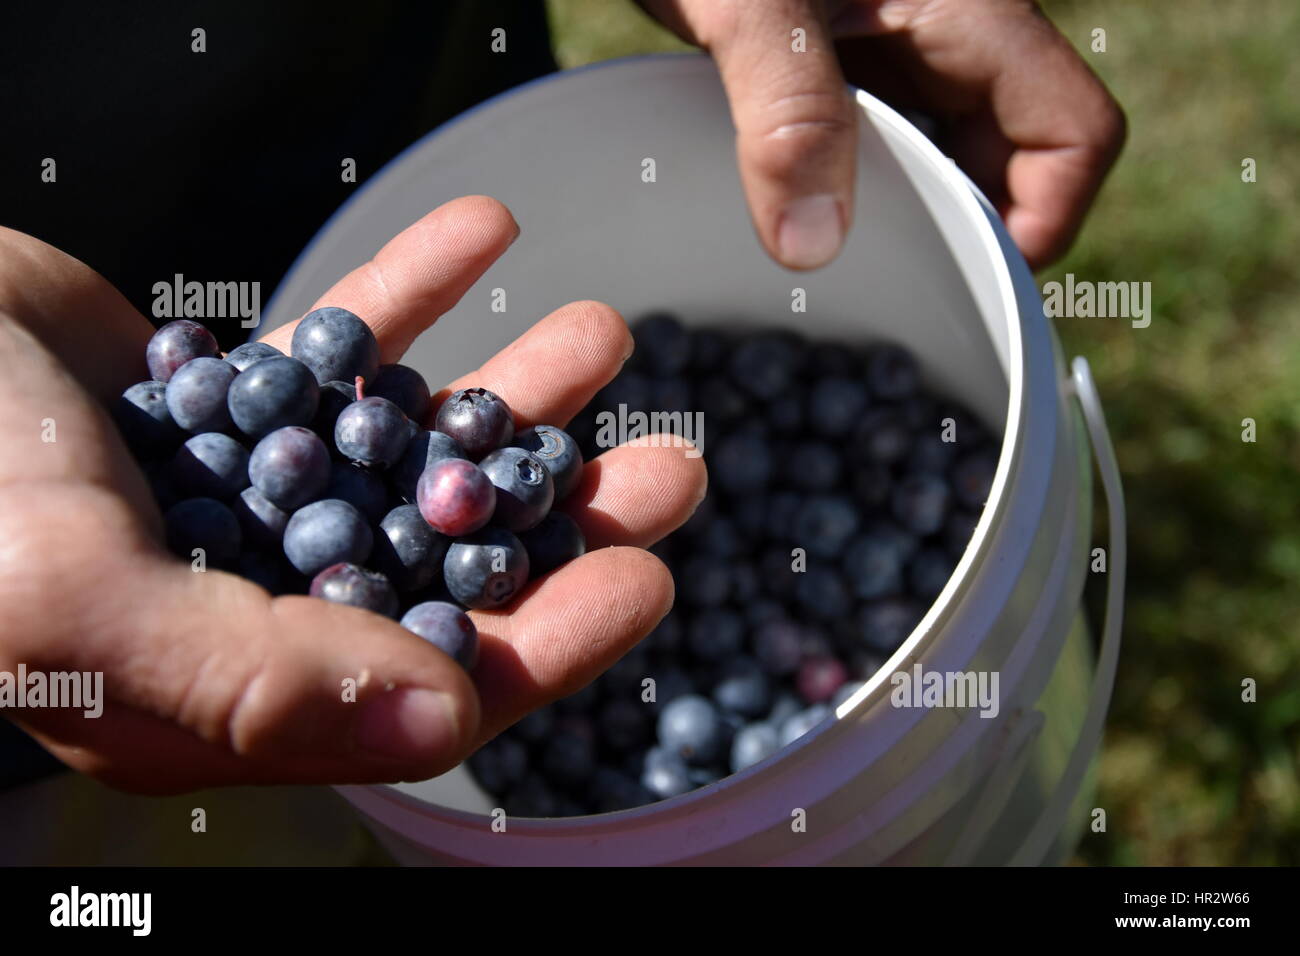 Hand holding bunch of blueberries. Freshly picked wild blueberries. Fresh Blueberries or Bilberries. Group of blueberry or stack of blueberries concep Stock Photo